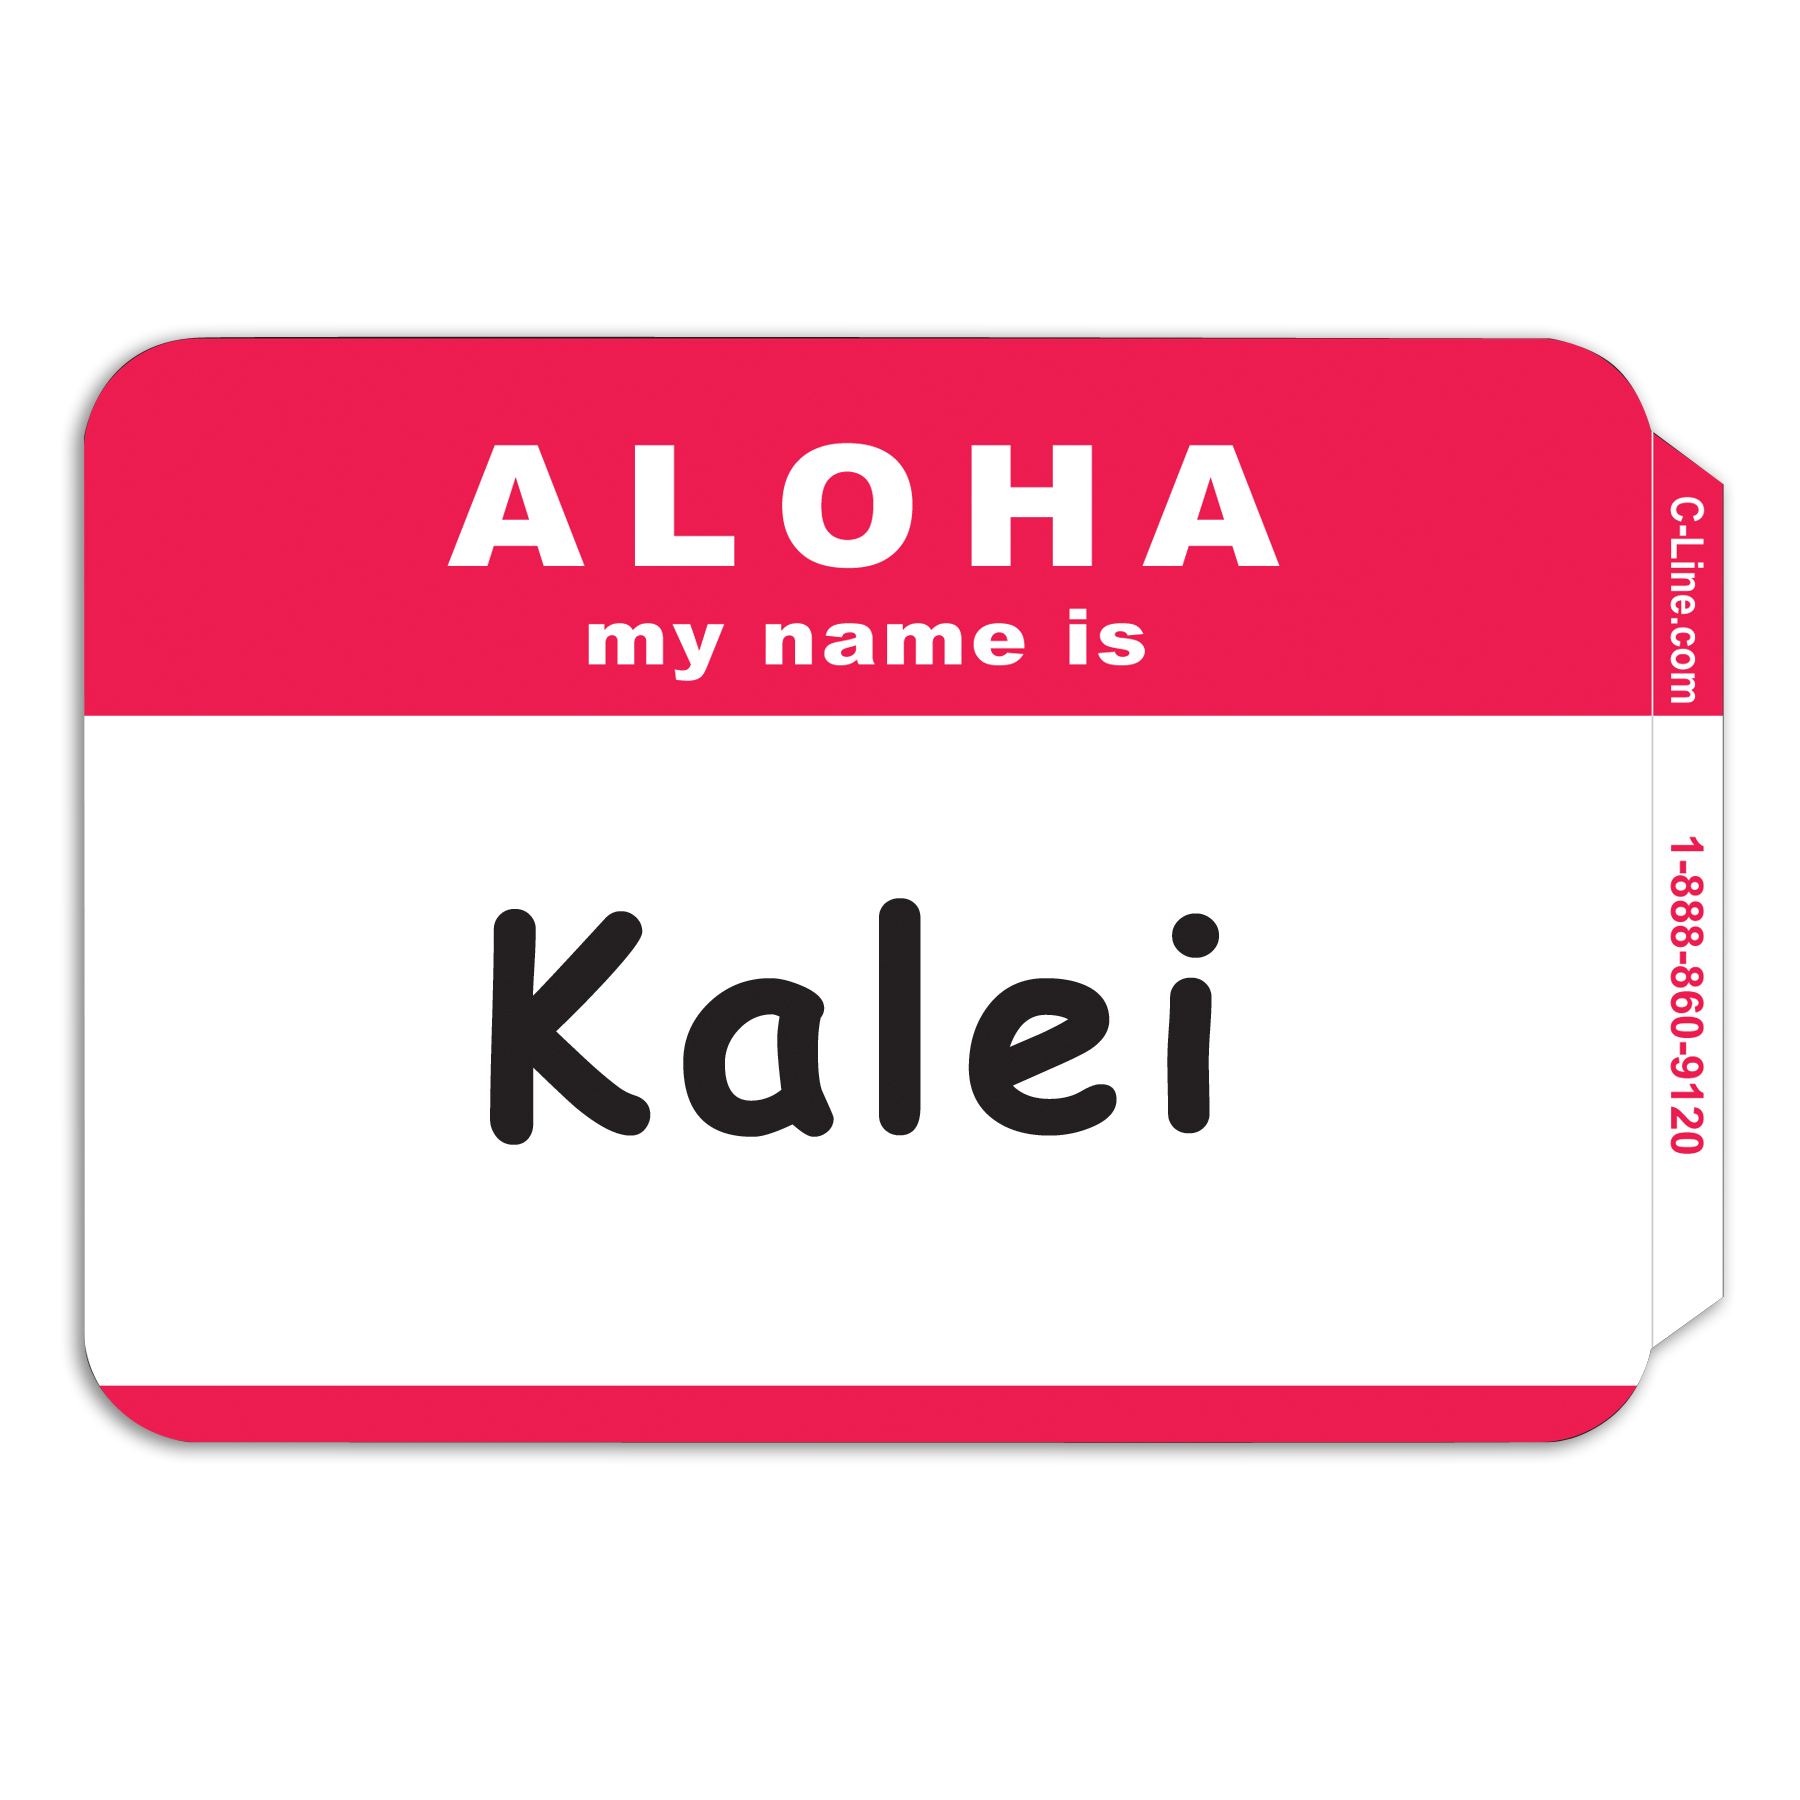 C-Line's Pressure Sensitive Badges, Aloha